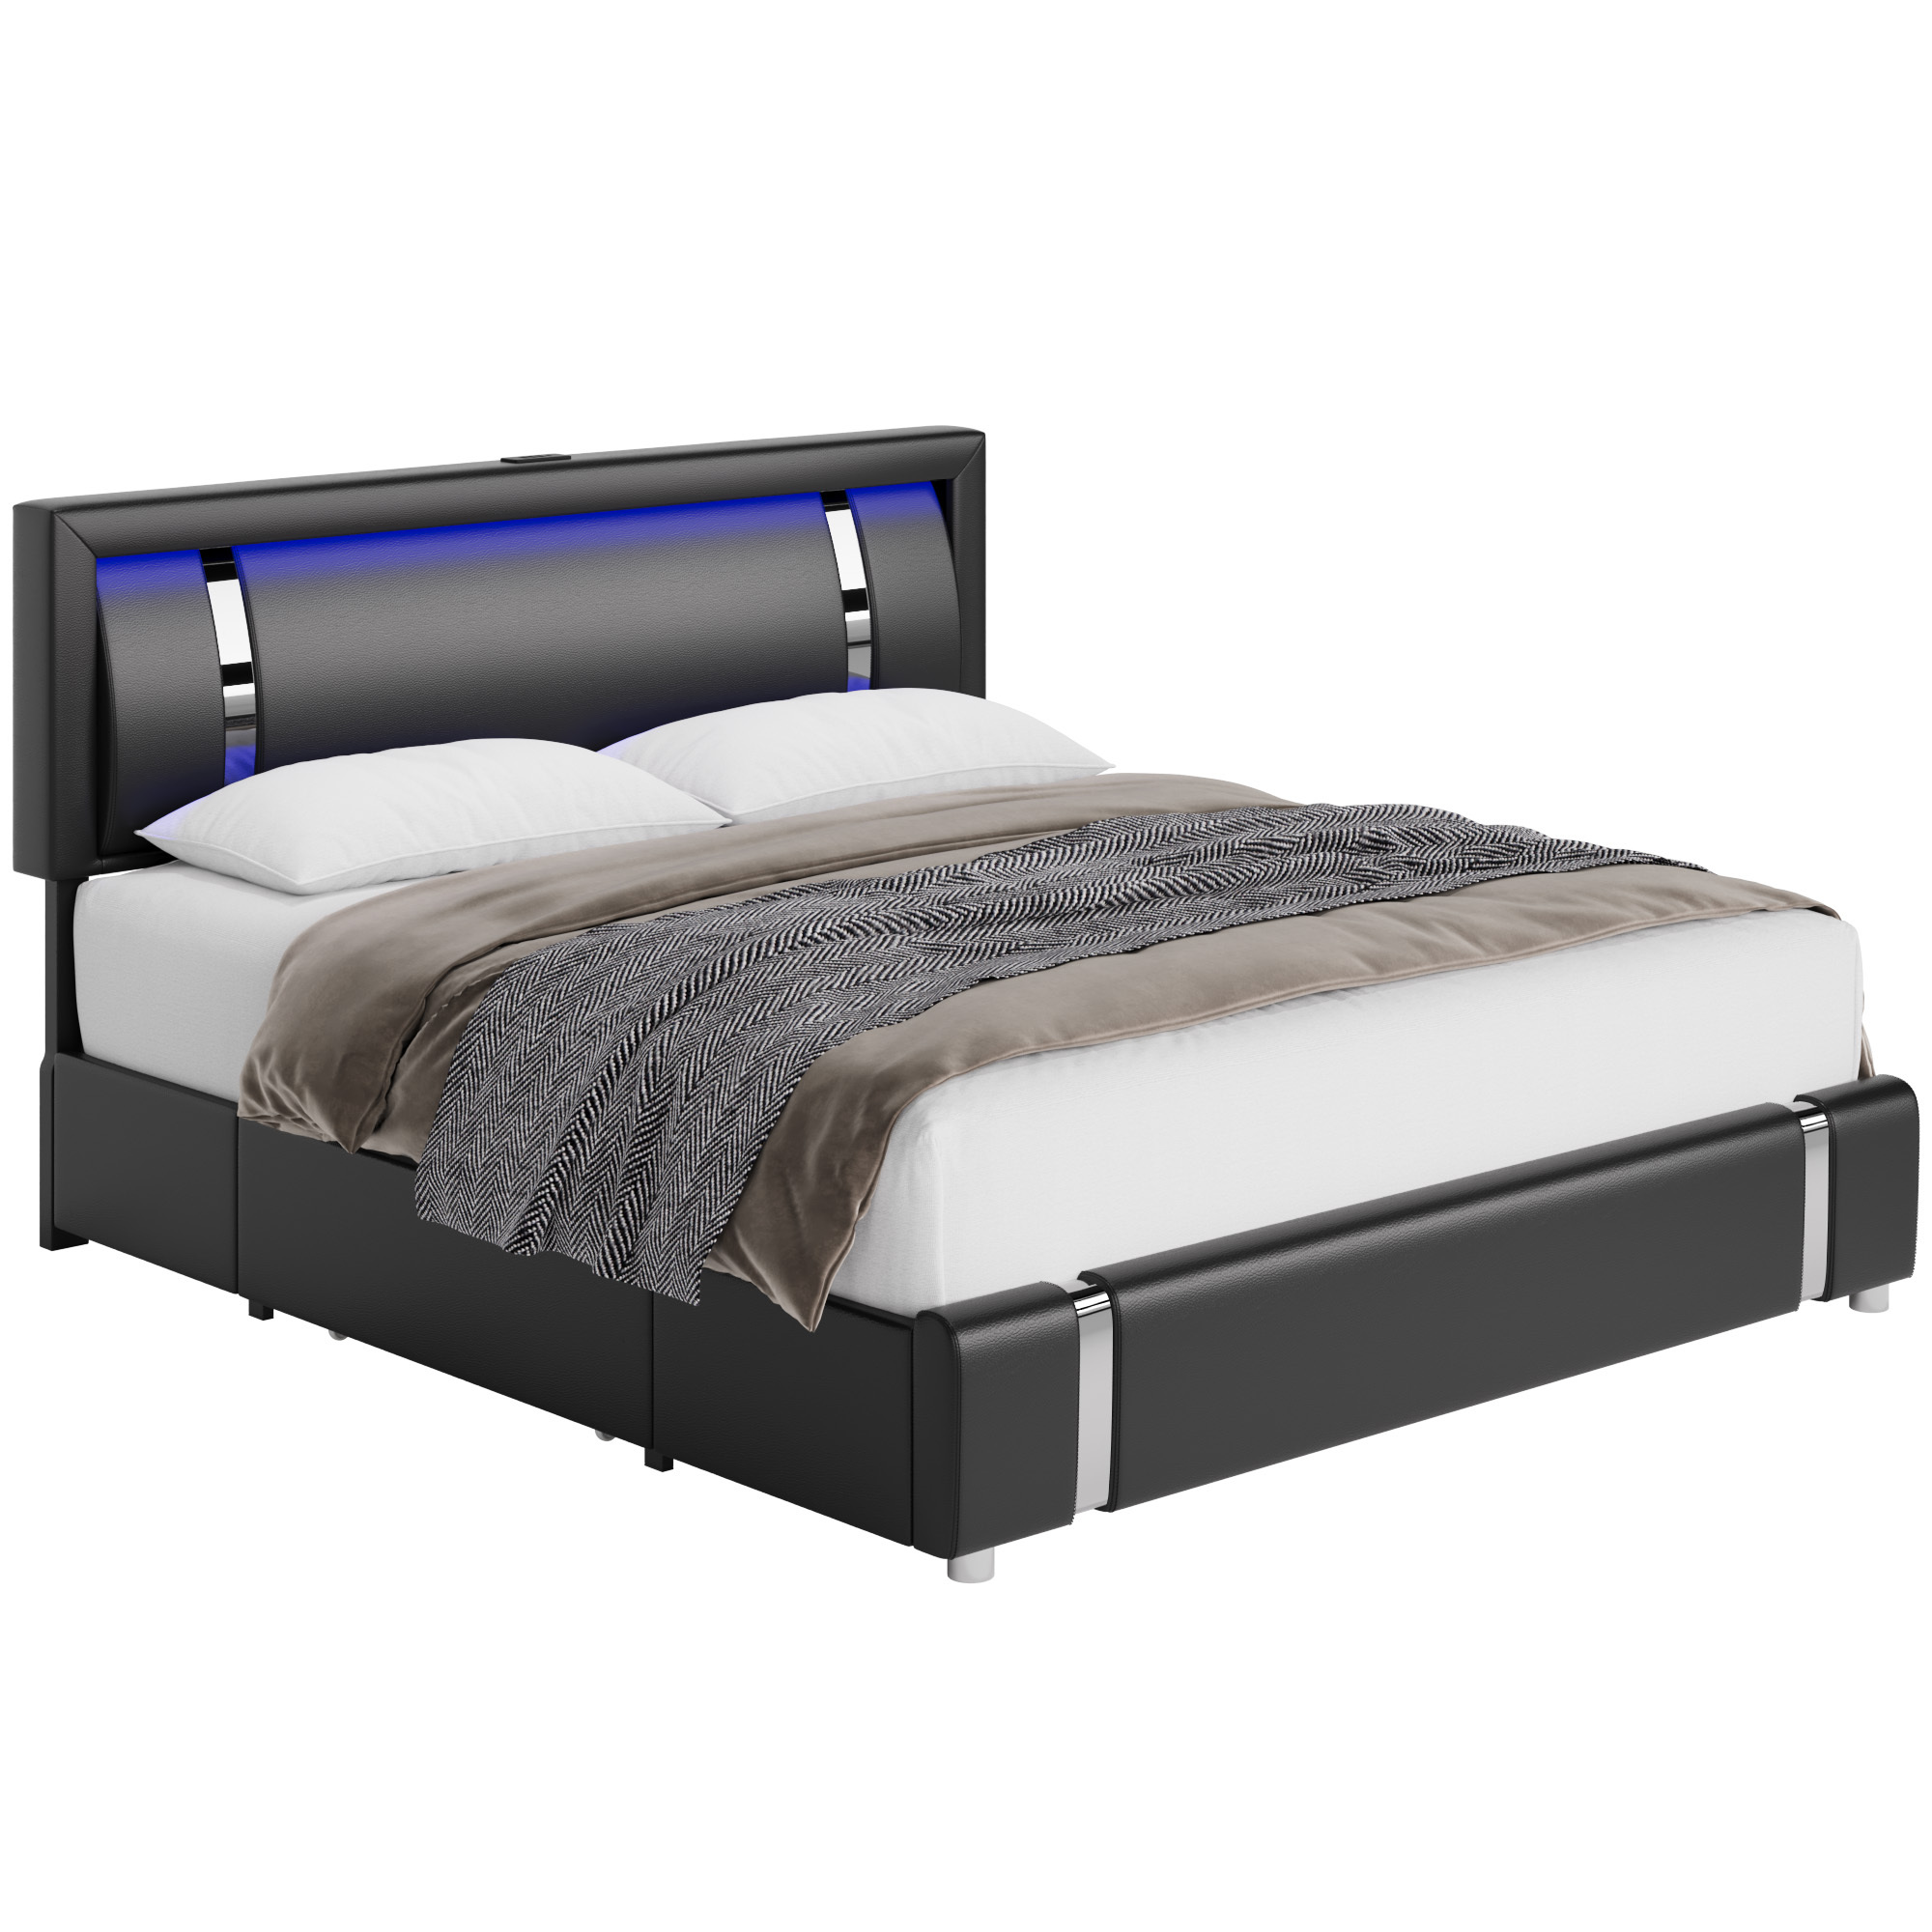 Homfa King Size LED Bed Frame with 2 Storage Drawers, Modern Leather Upholstered Platform Bed Frame with Adjustable Headboard, Black - image 3 of 11